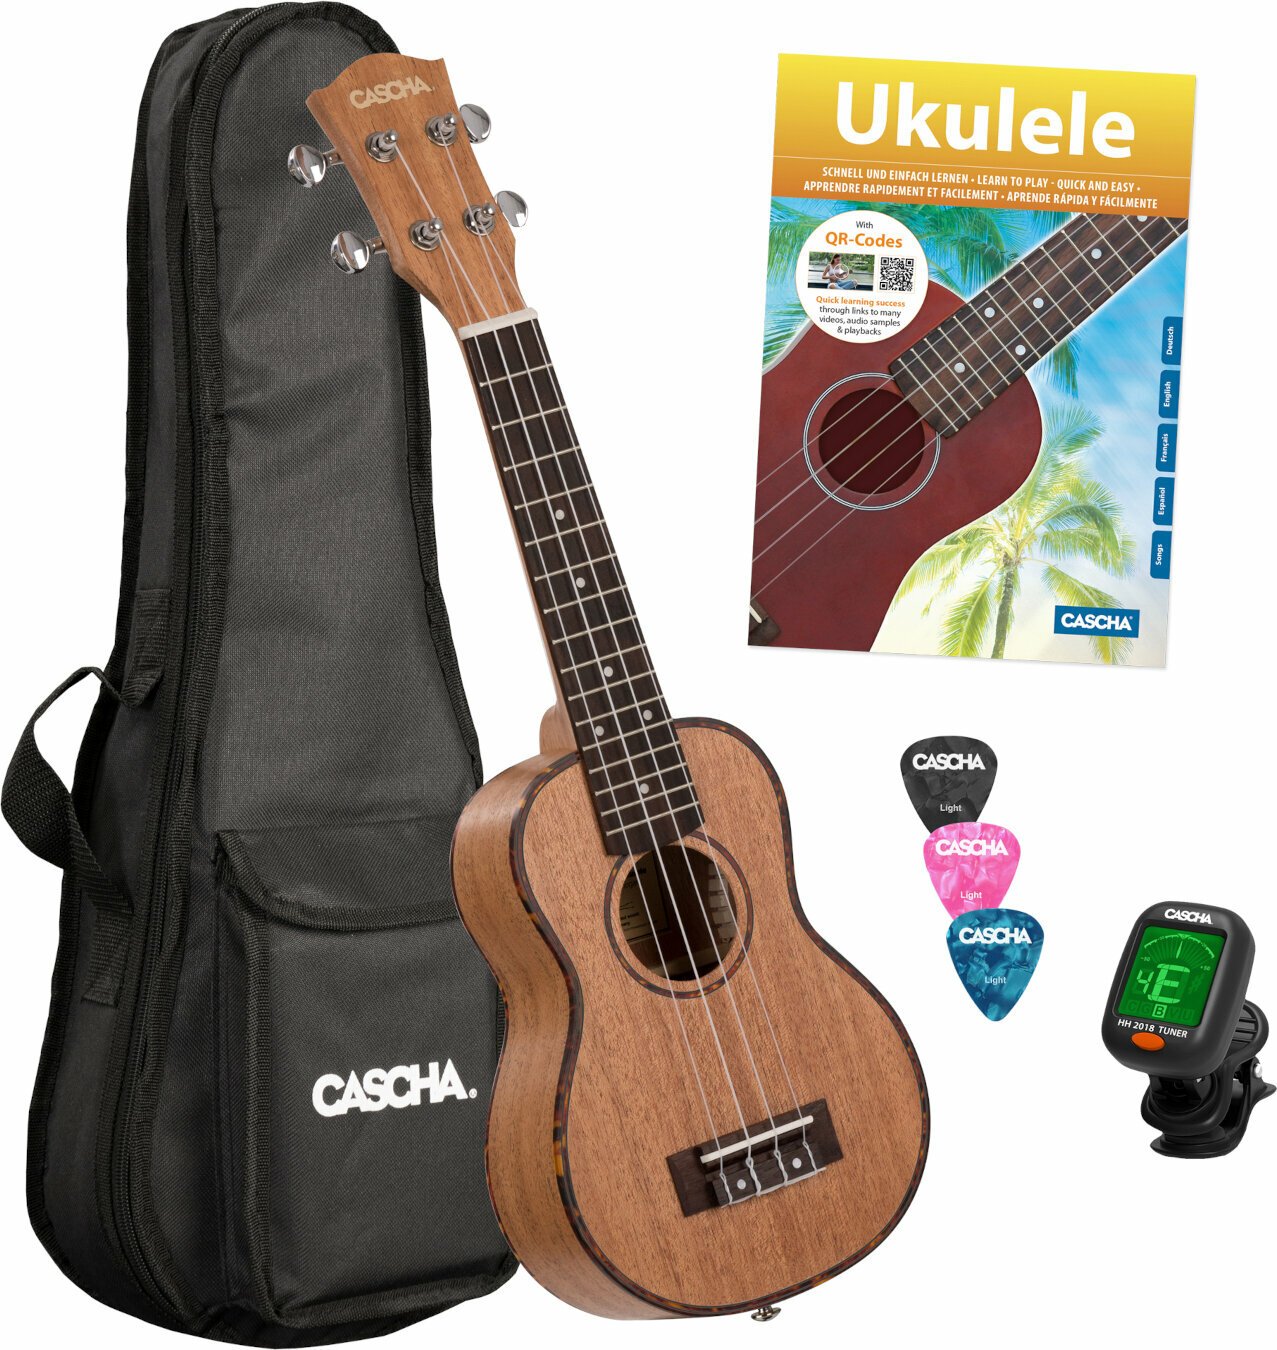 Szoprán ukulele Cascha HH 2027 Premium Szoprán ukulele Natural